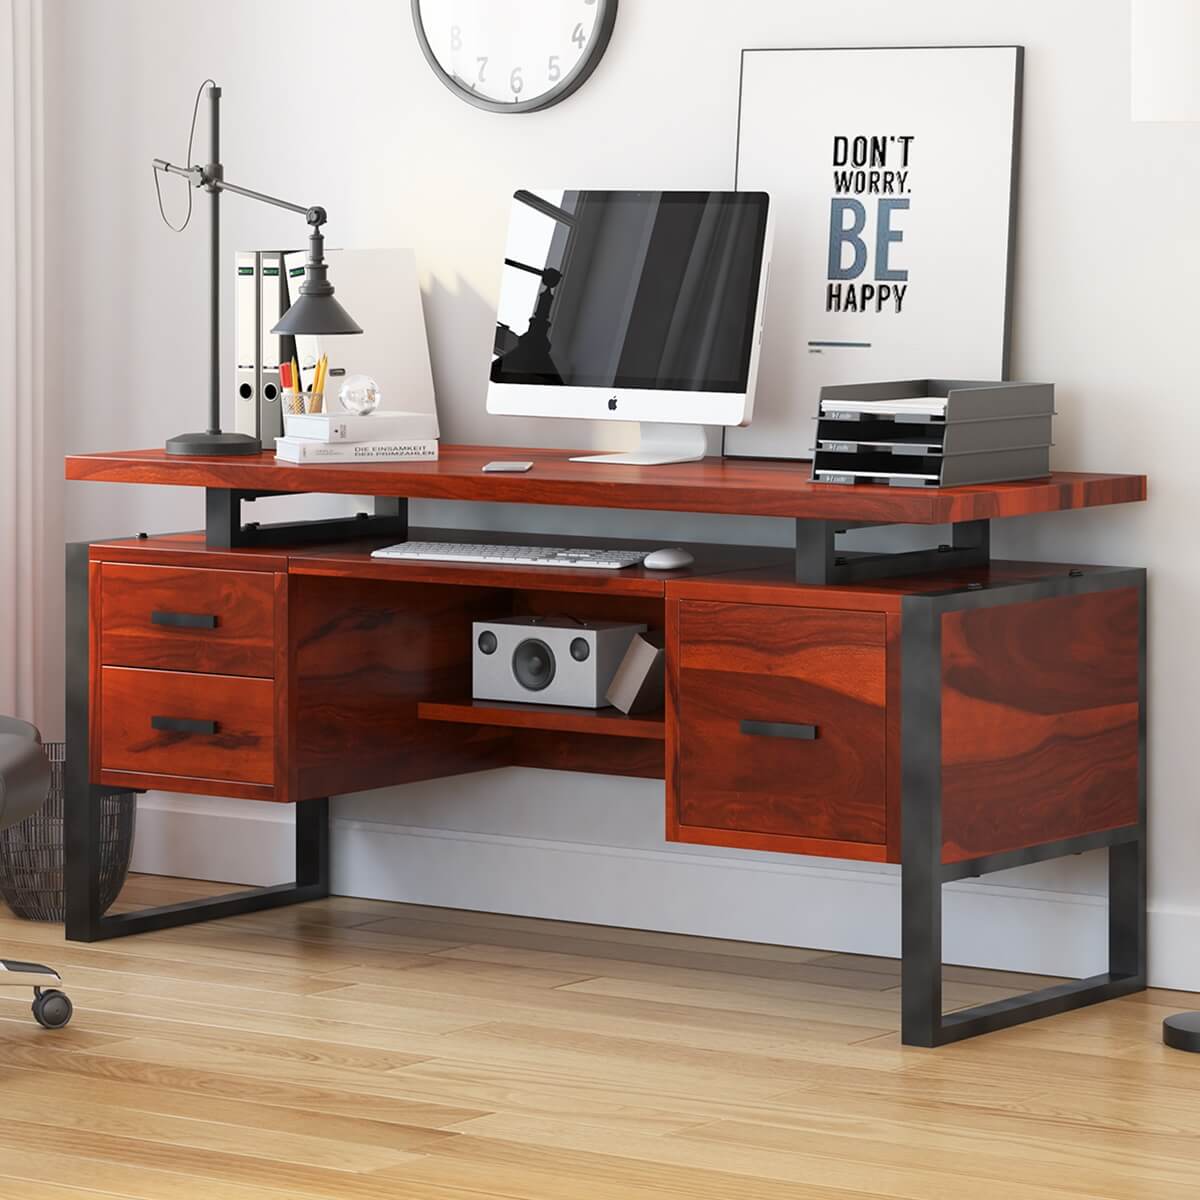 https://www.sierralivingconcepts.com/images/thumbs/0399991_hondah-solid-wood-64-inch-modern-industrial-home-office-desk.jpeg